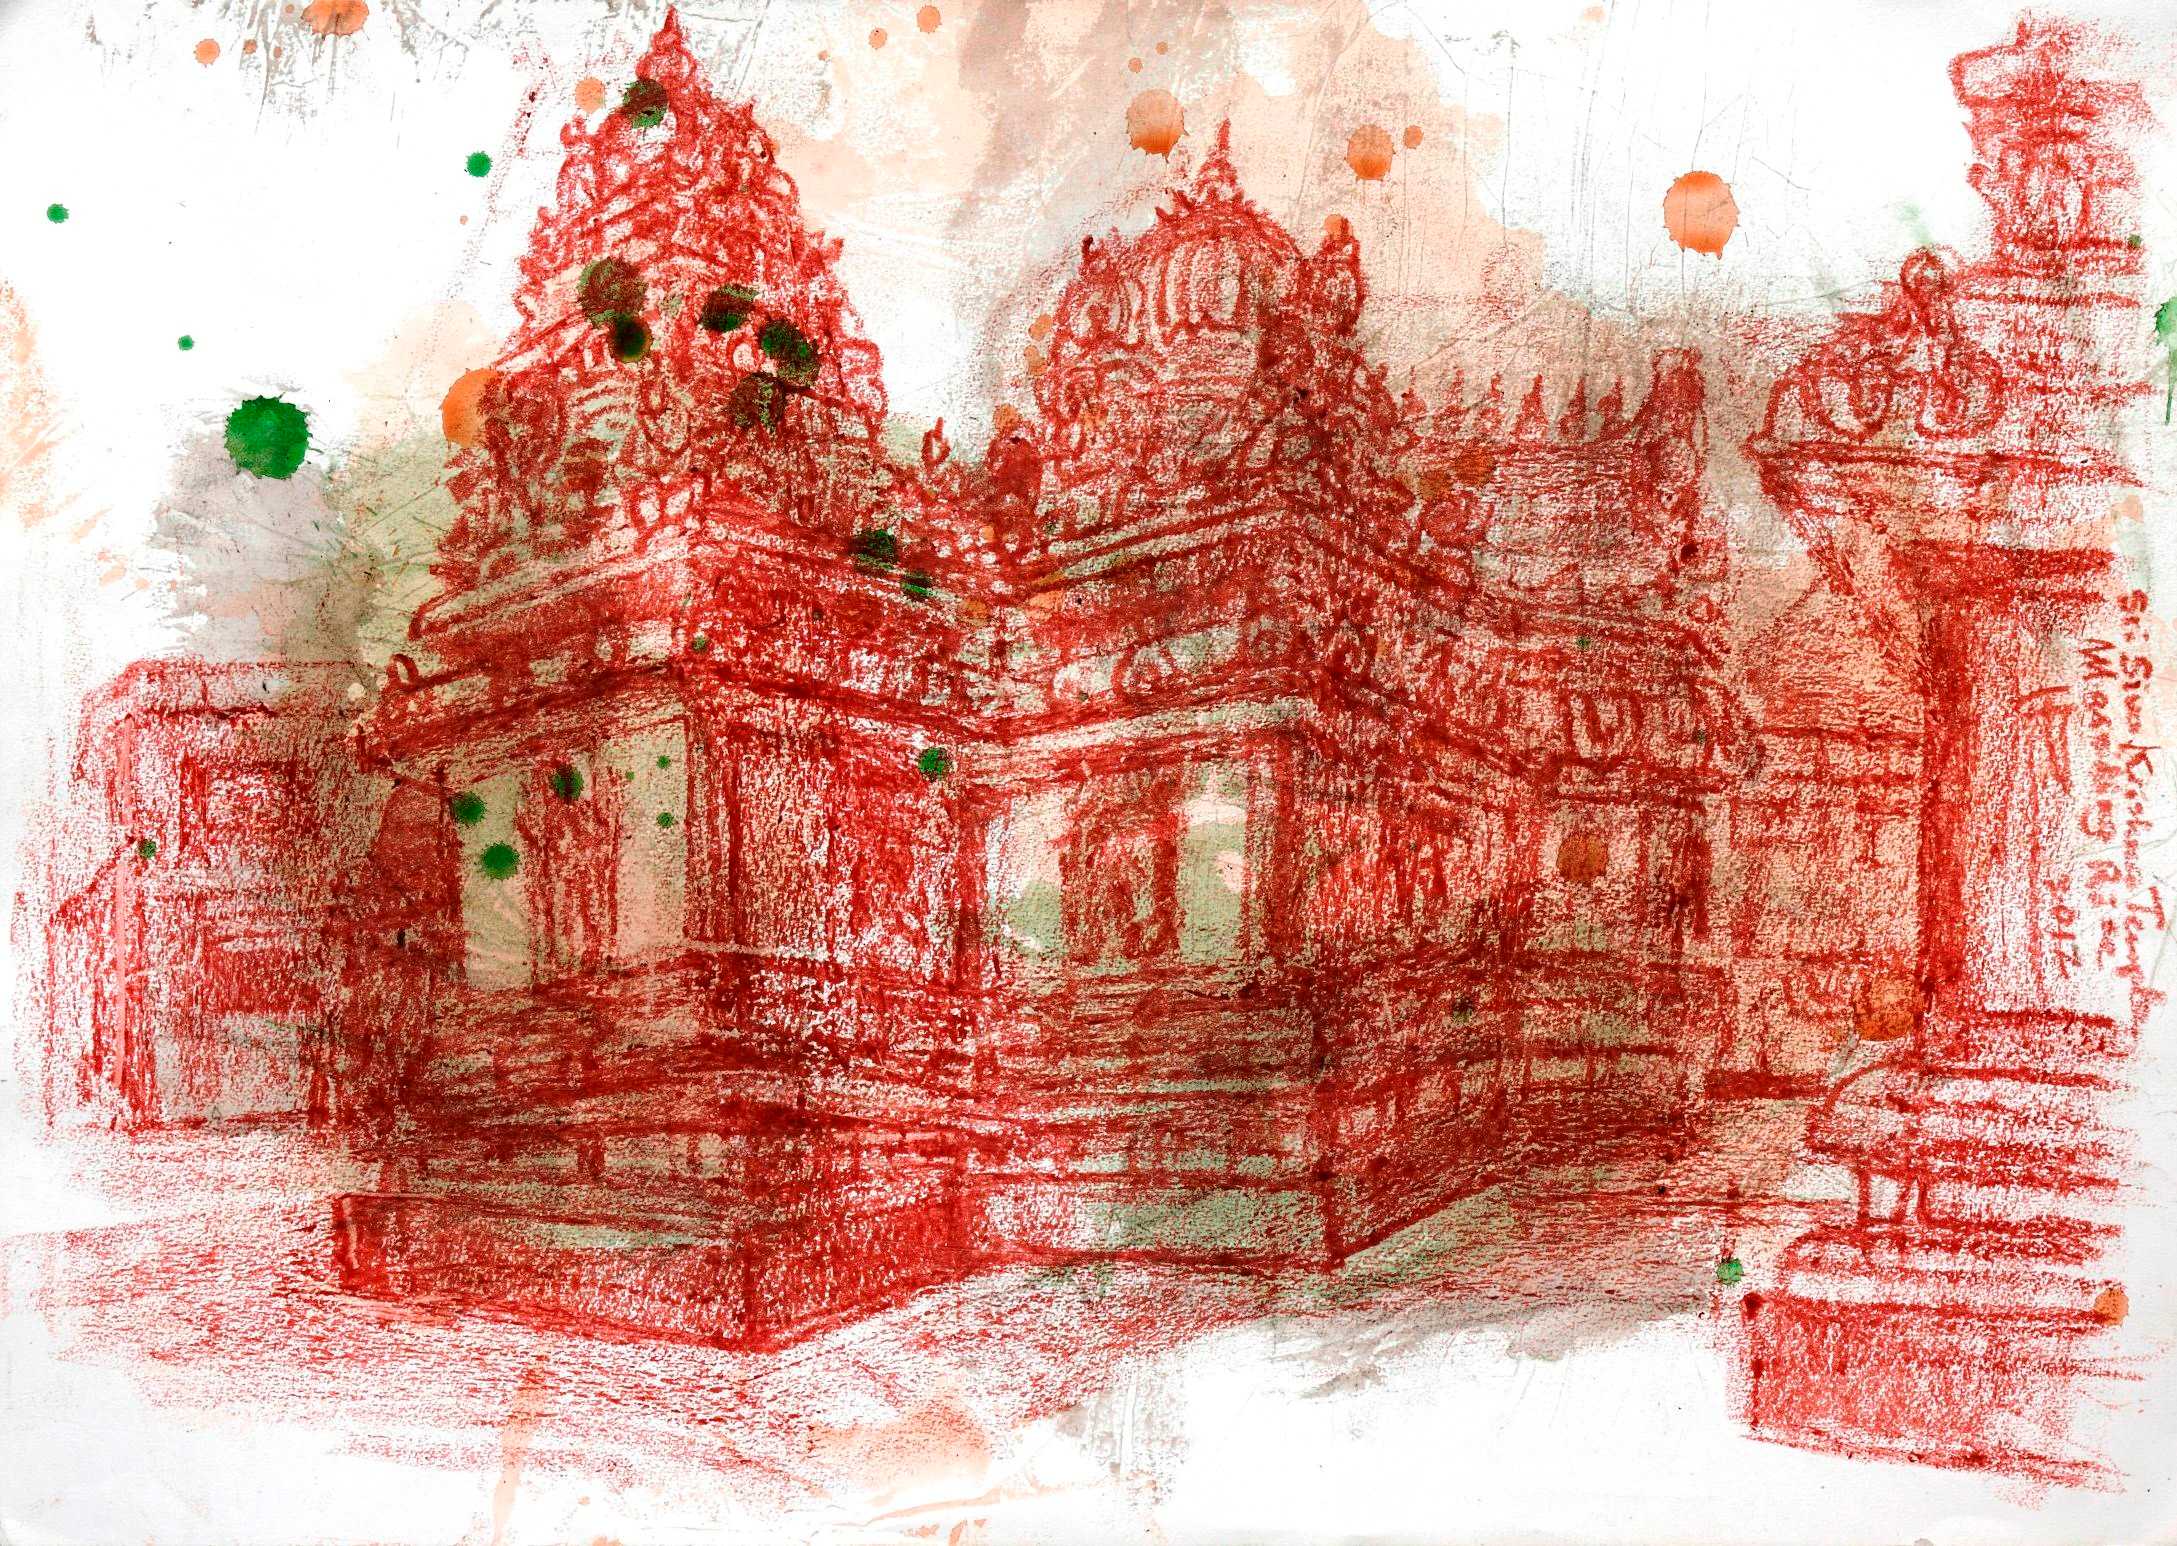 Sri Siva Krishna Temple